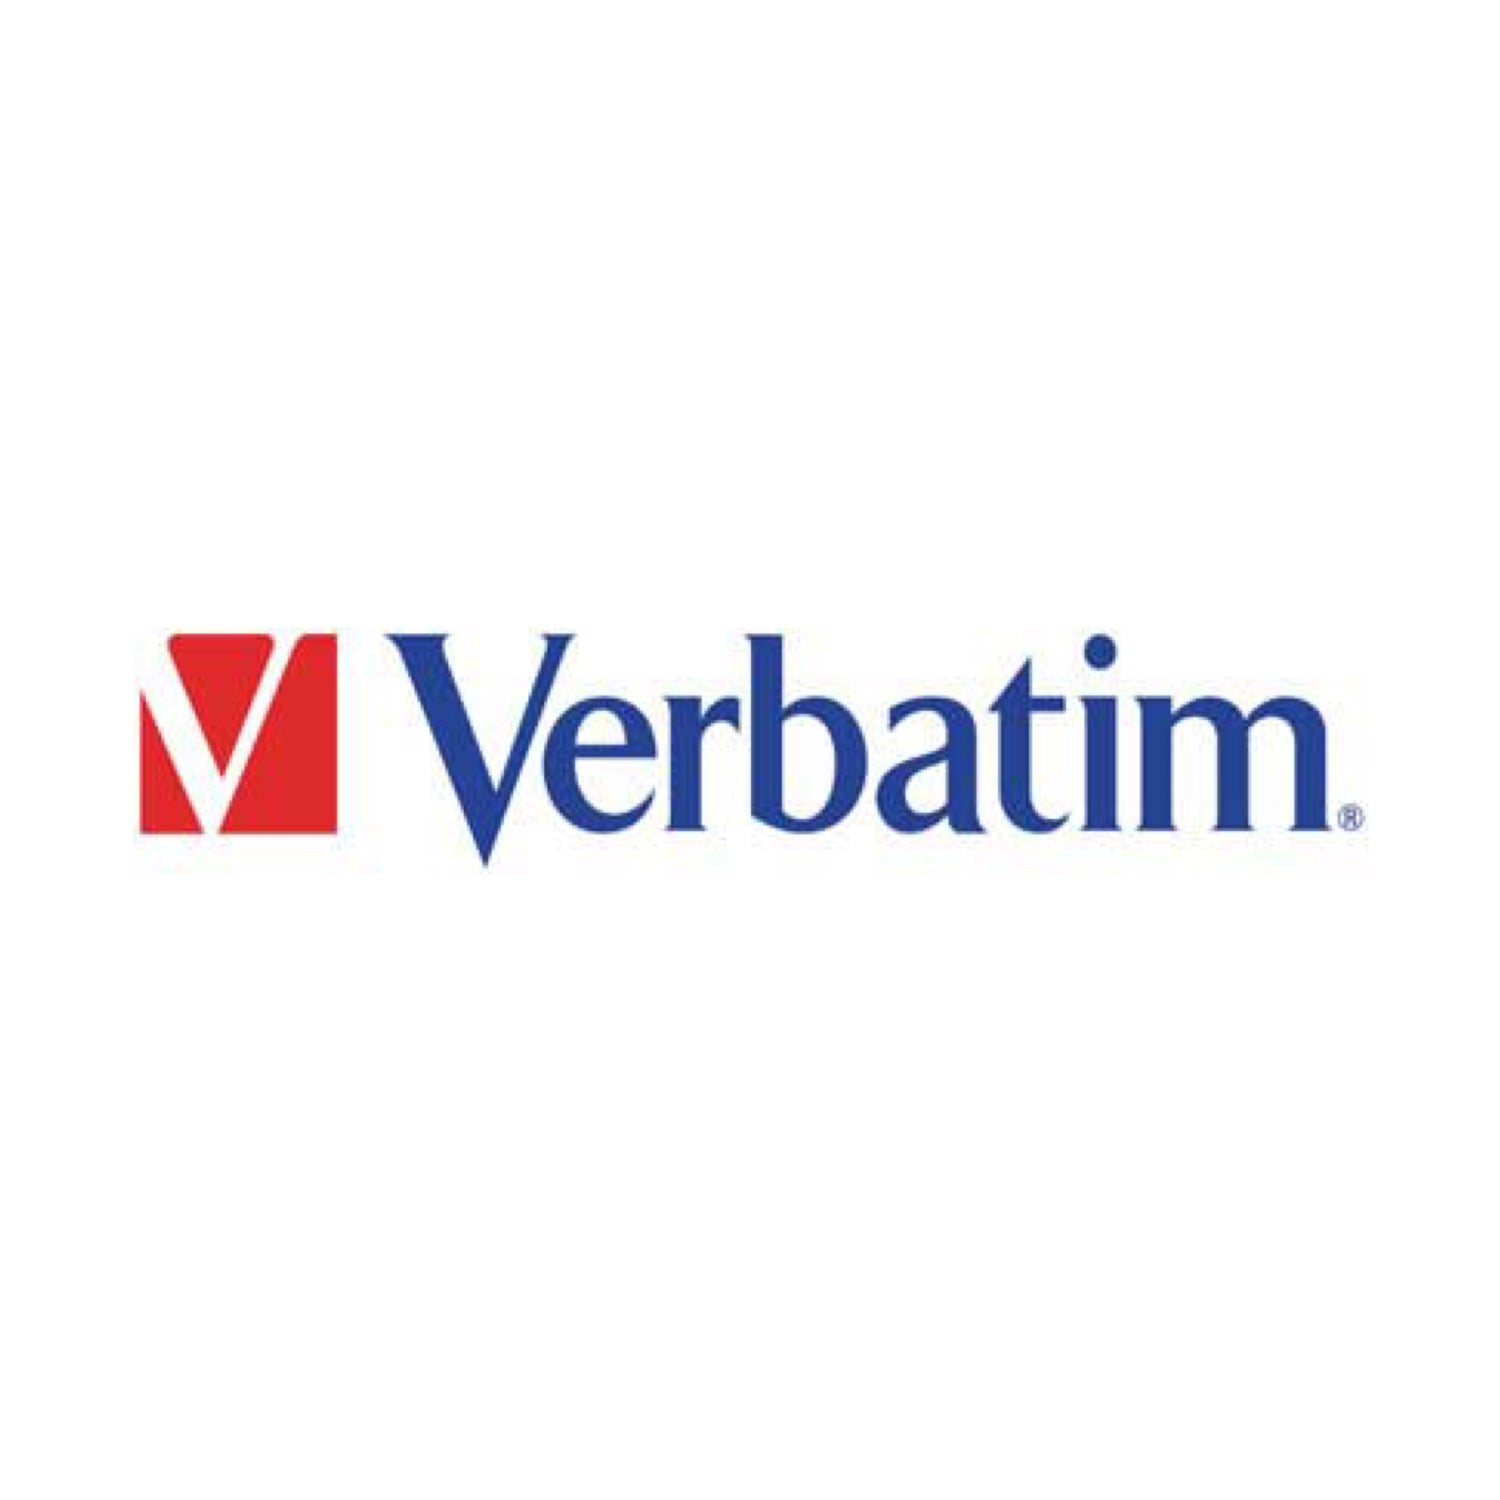 VERBATIM AMERICAS LLC